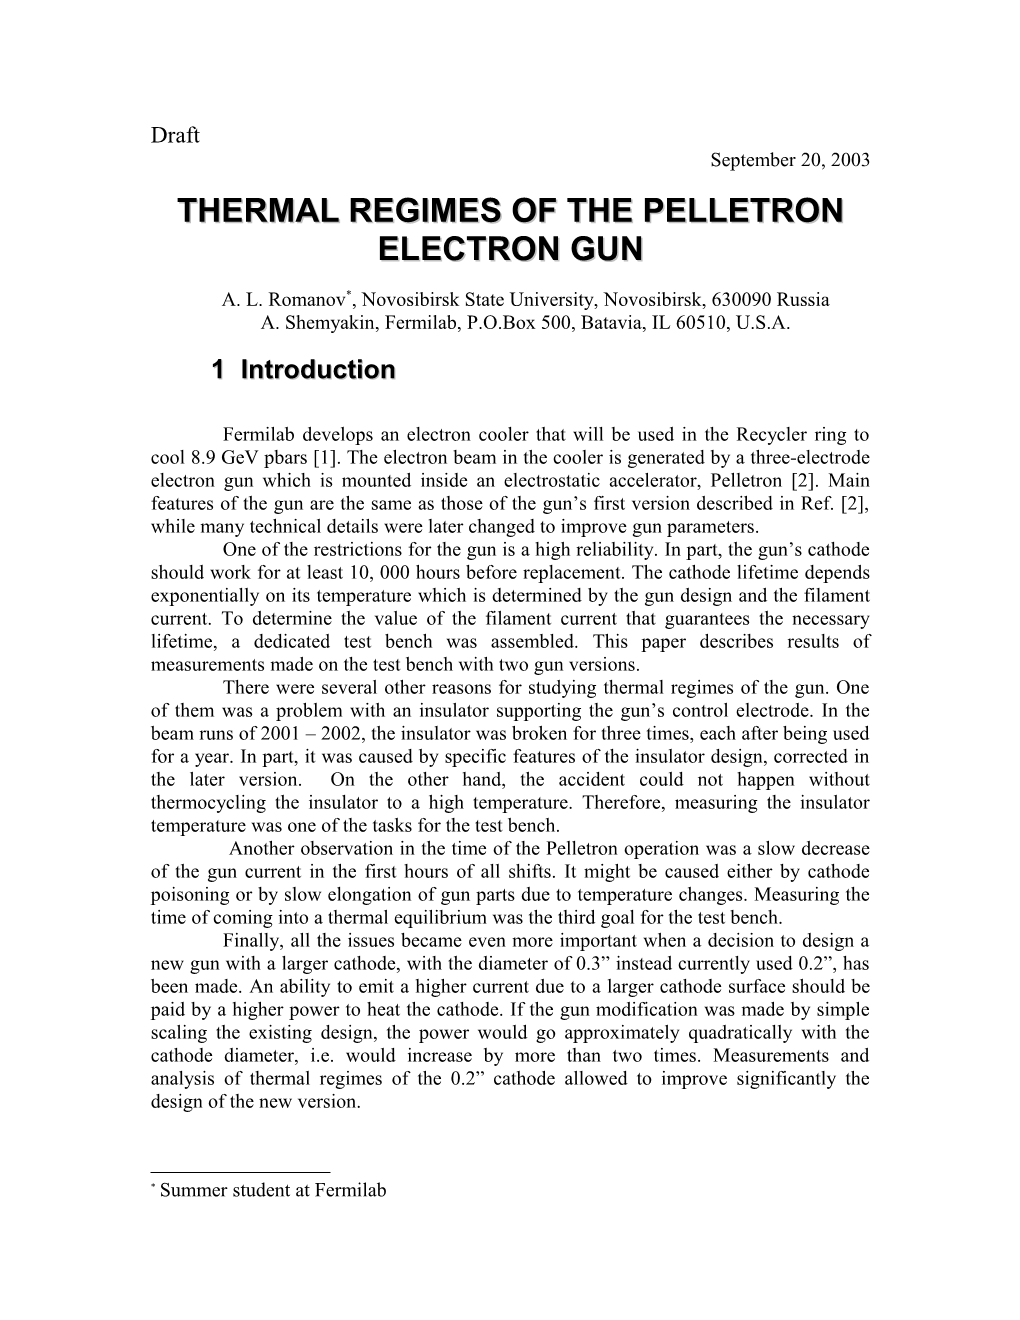 Thermal Regimes of the Pelletron Electron Gun